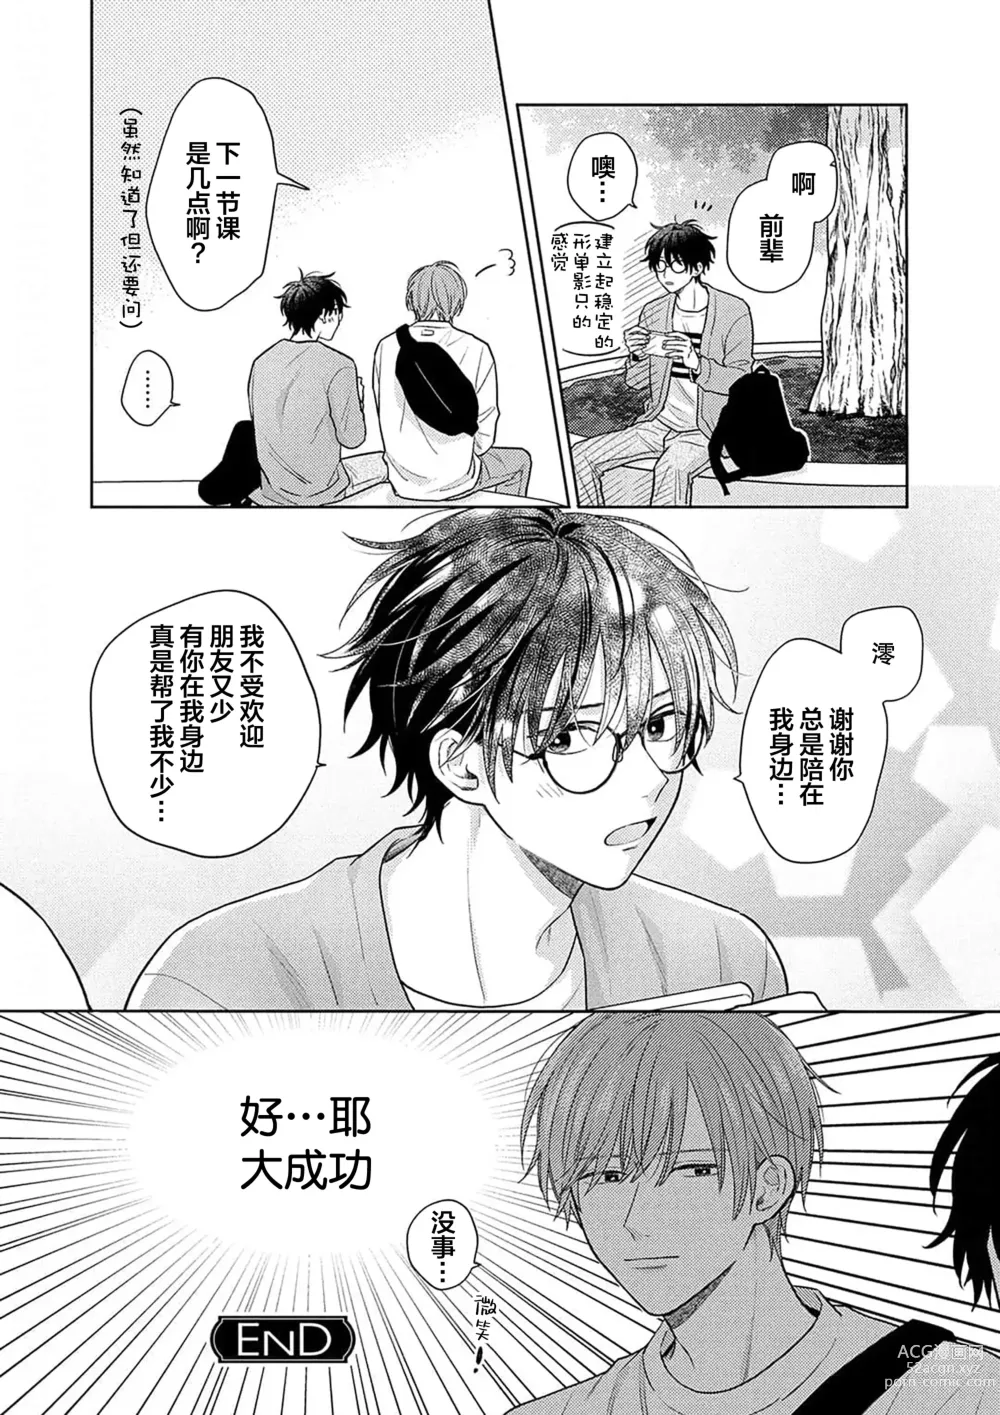 Page 193 of manga 这真的是恋爱吗?